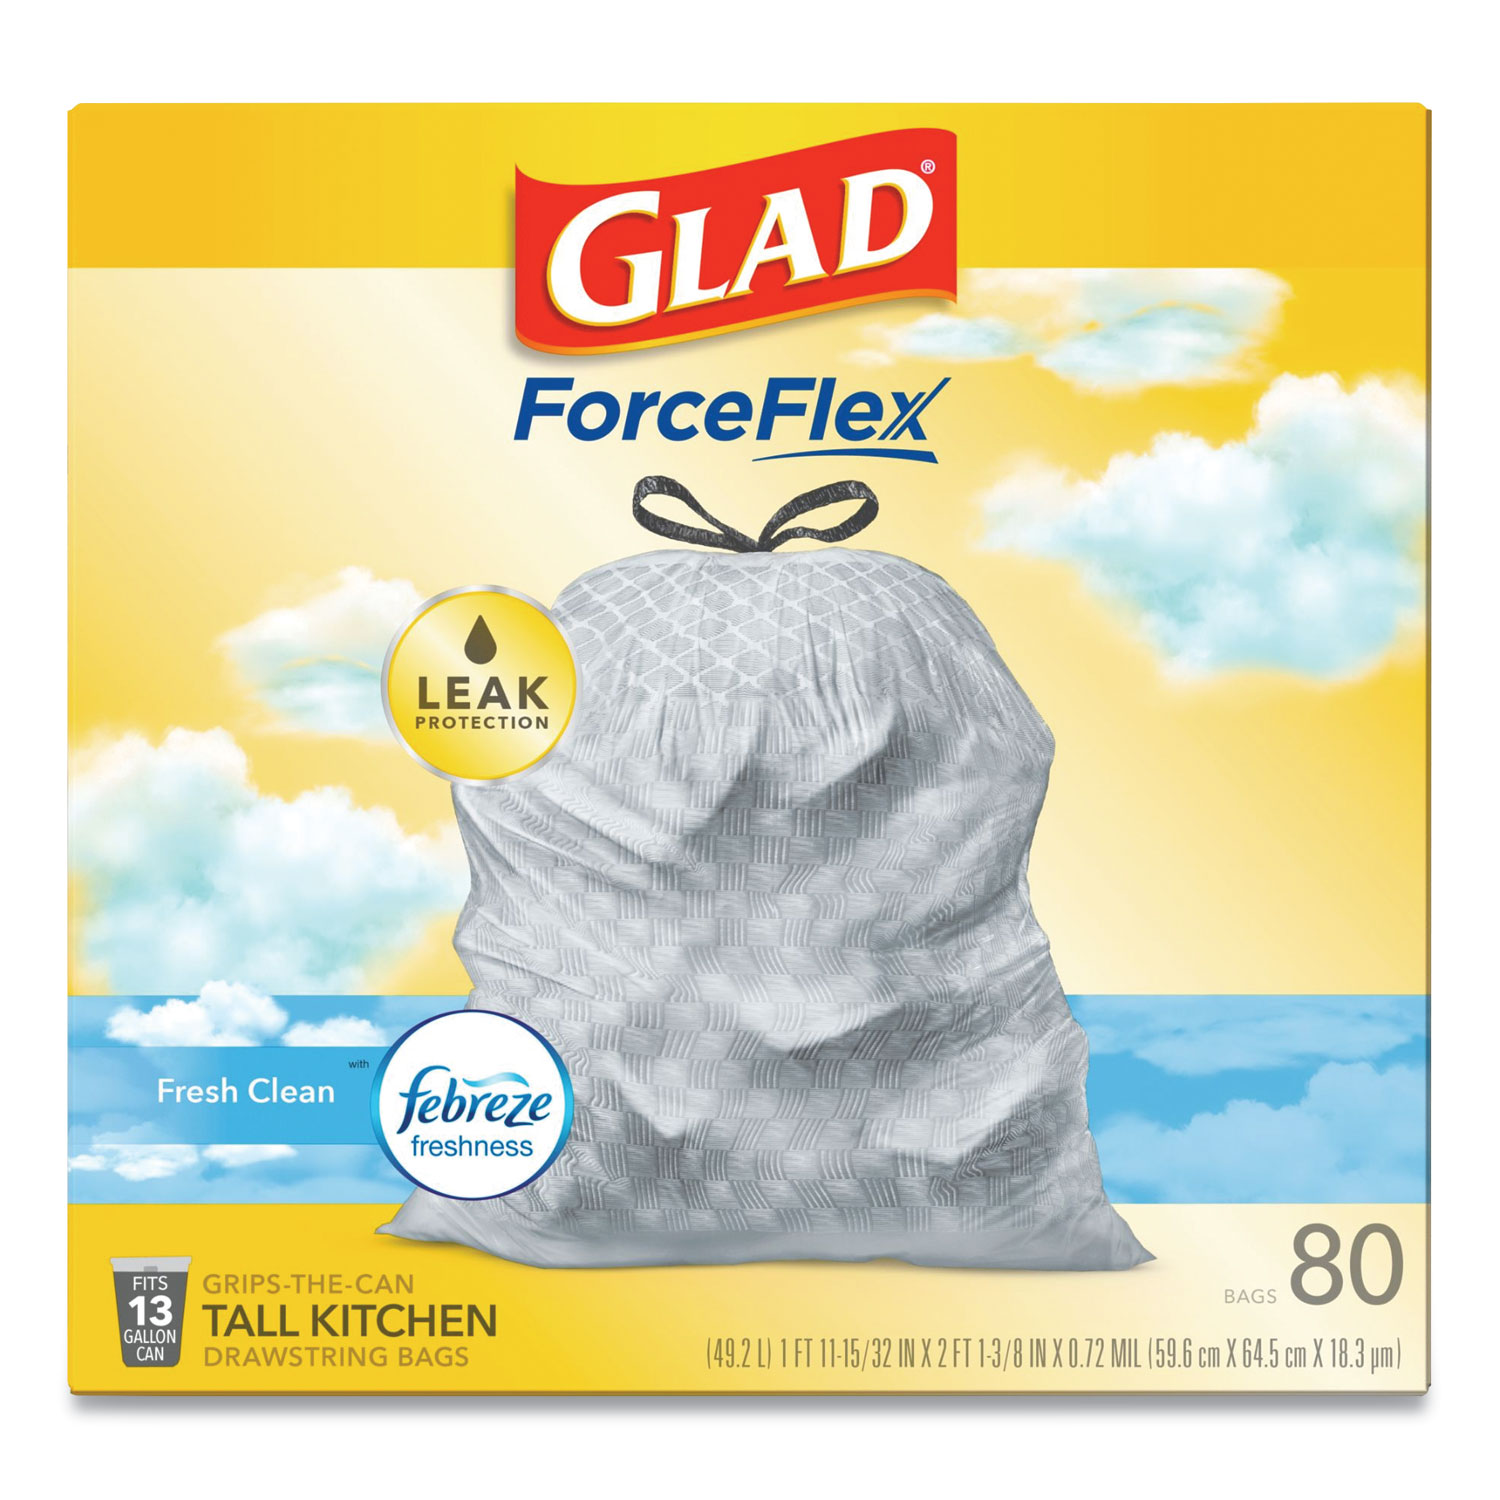 Glad® OdorShield Tall Kitchen Drawstring Bags, 13 gal, 0.72 mil, 24 x  27.38, White, 80 Bags/Box, 3 Boxes/Carton